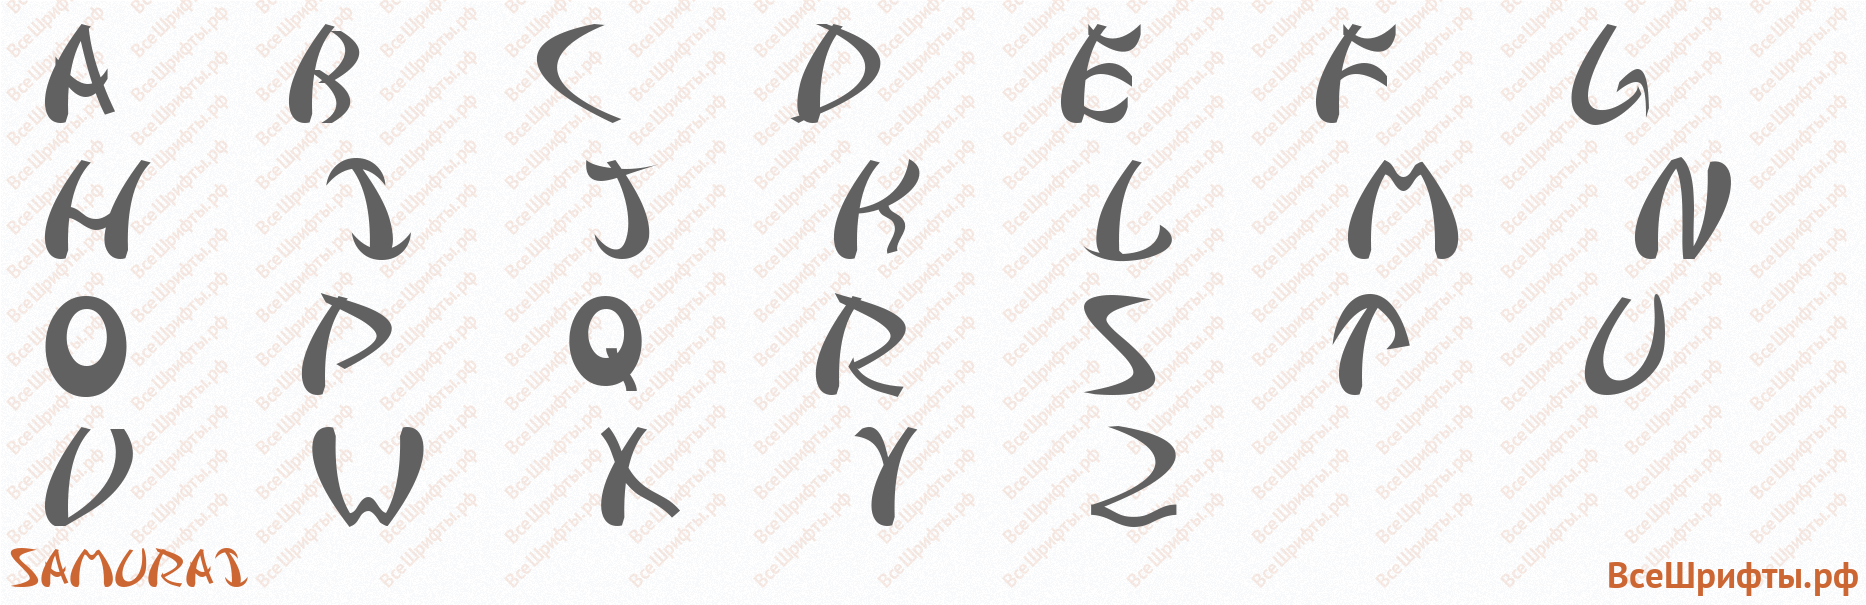 Шрифт Samurai с латинскими буквами